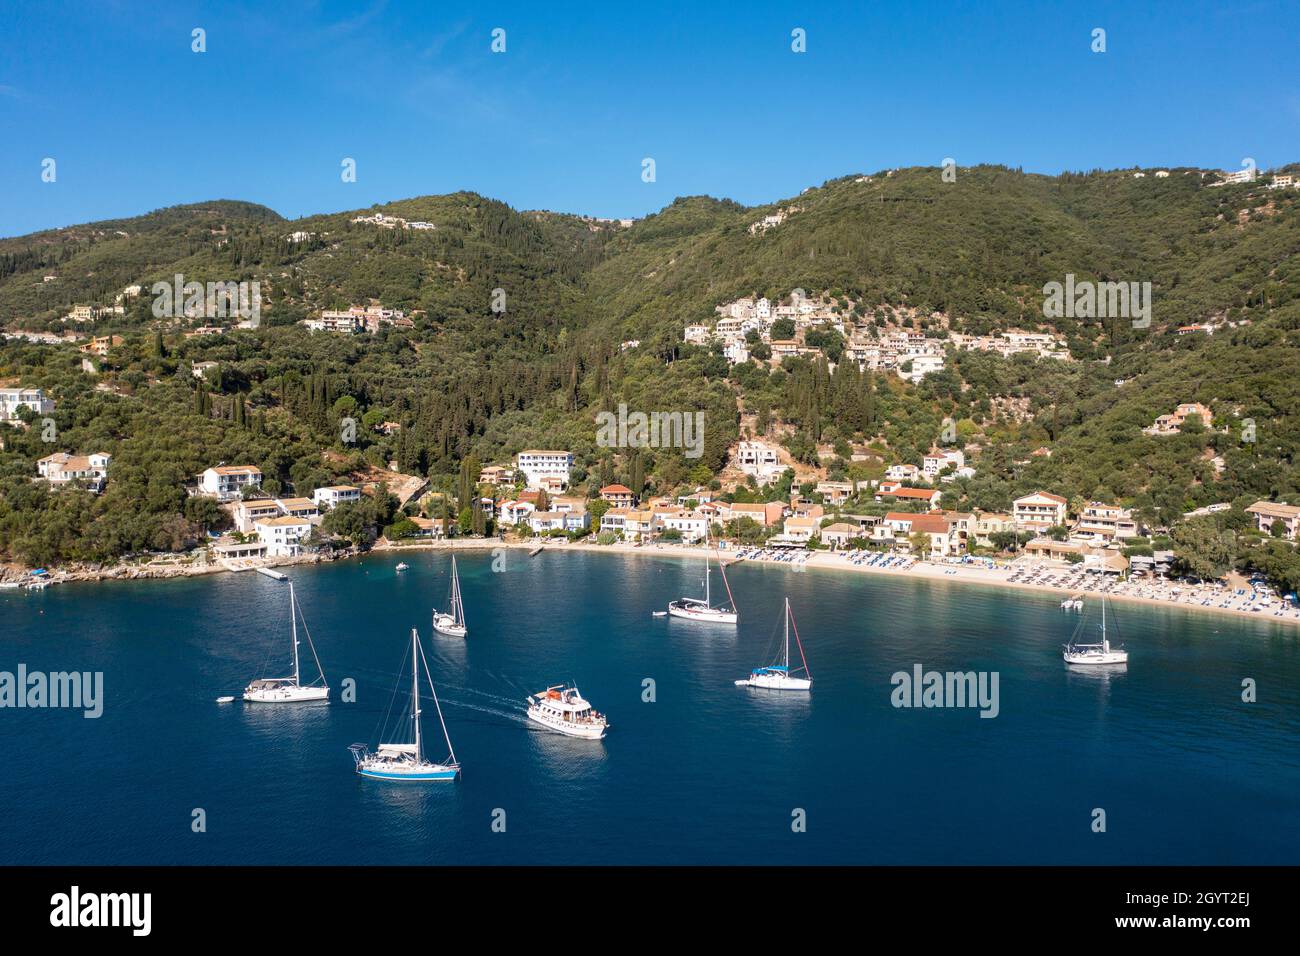 Aerial landscape view of Kalami, a popular tourist destination on the northeast coast of Corfu, Ionian Islands, Greece Stock Photo